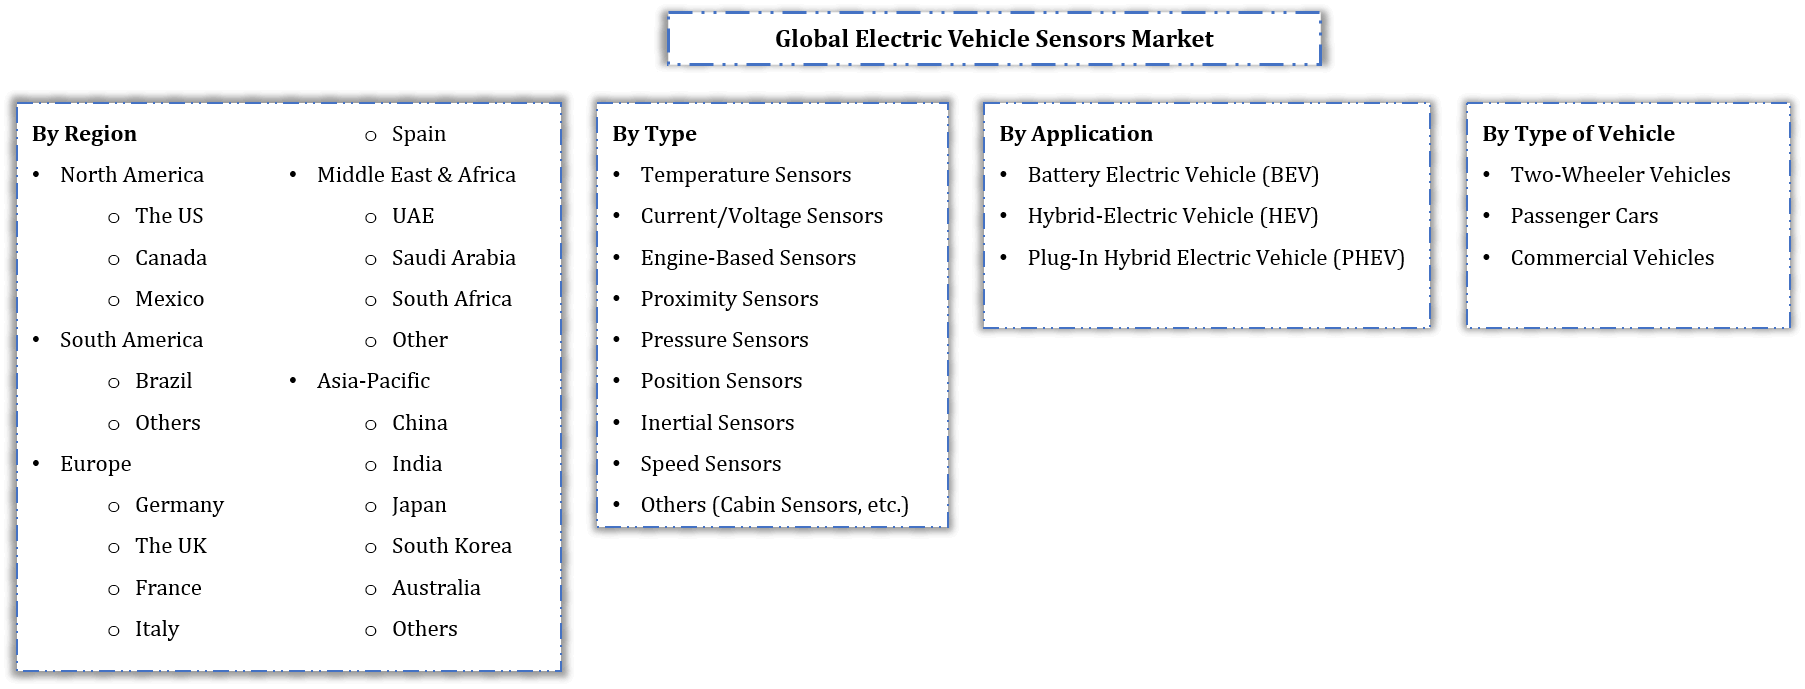 Global Electric Vehicle Sensors Market Segmentation